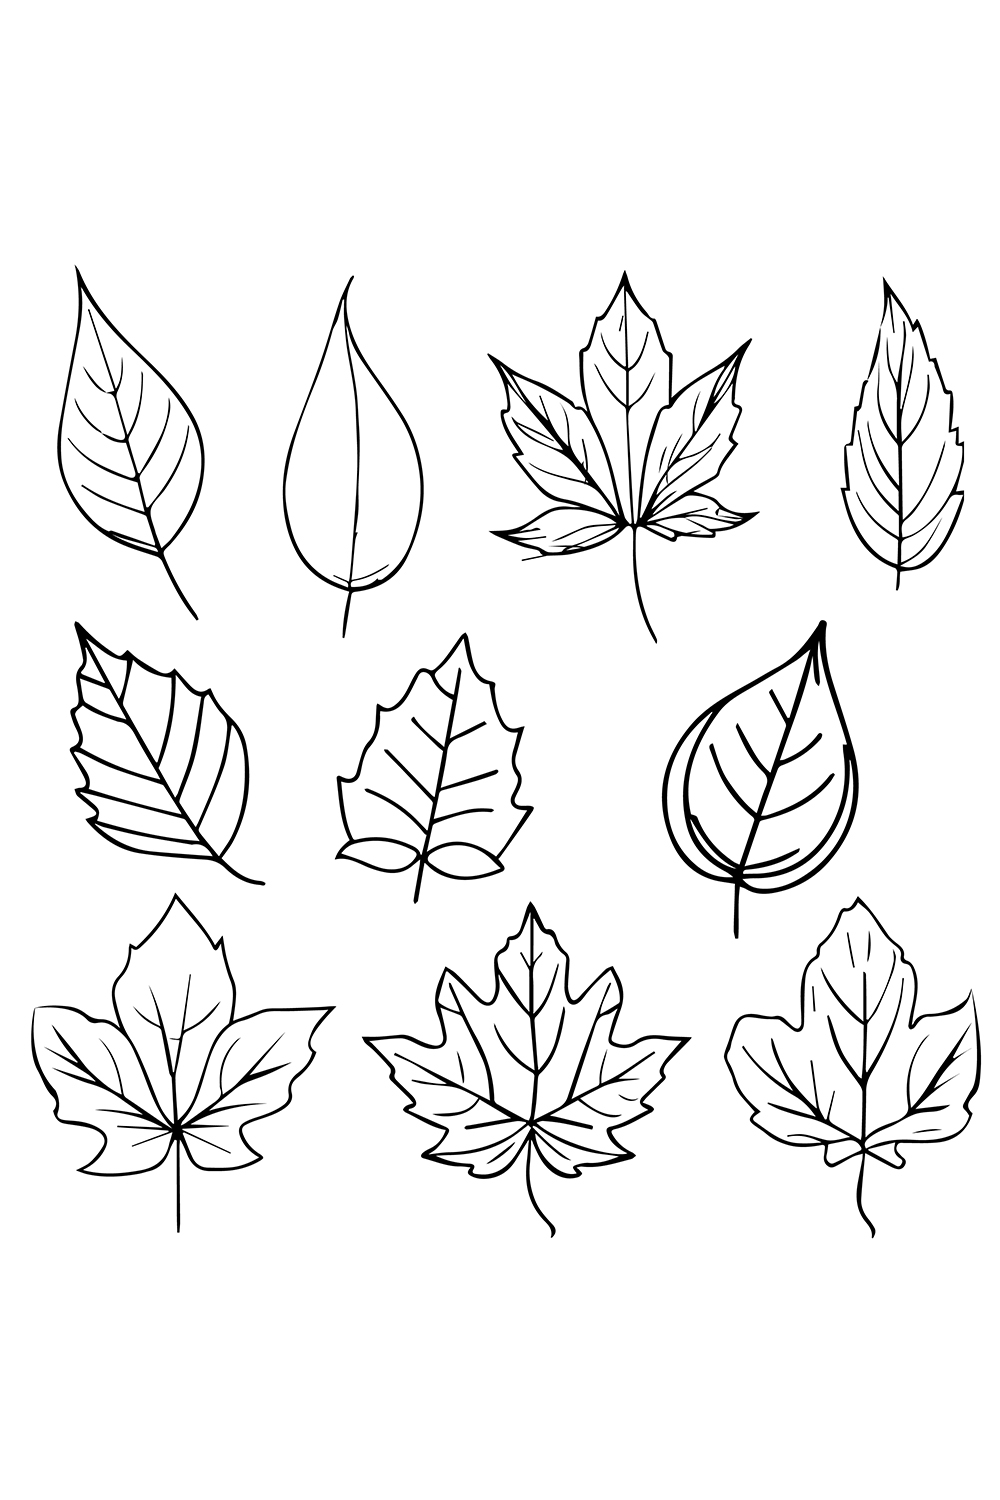 Ginkgo leaf part 1: drawing – Sandrine Maugy